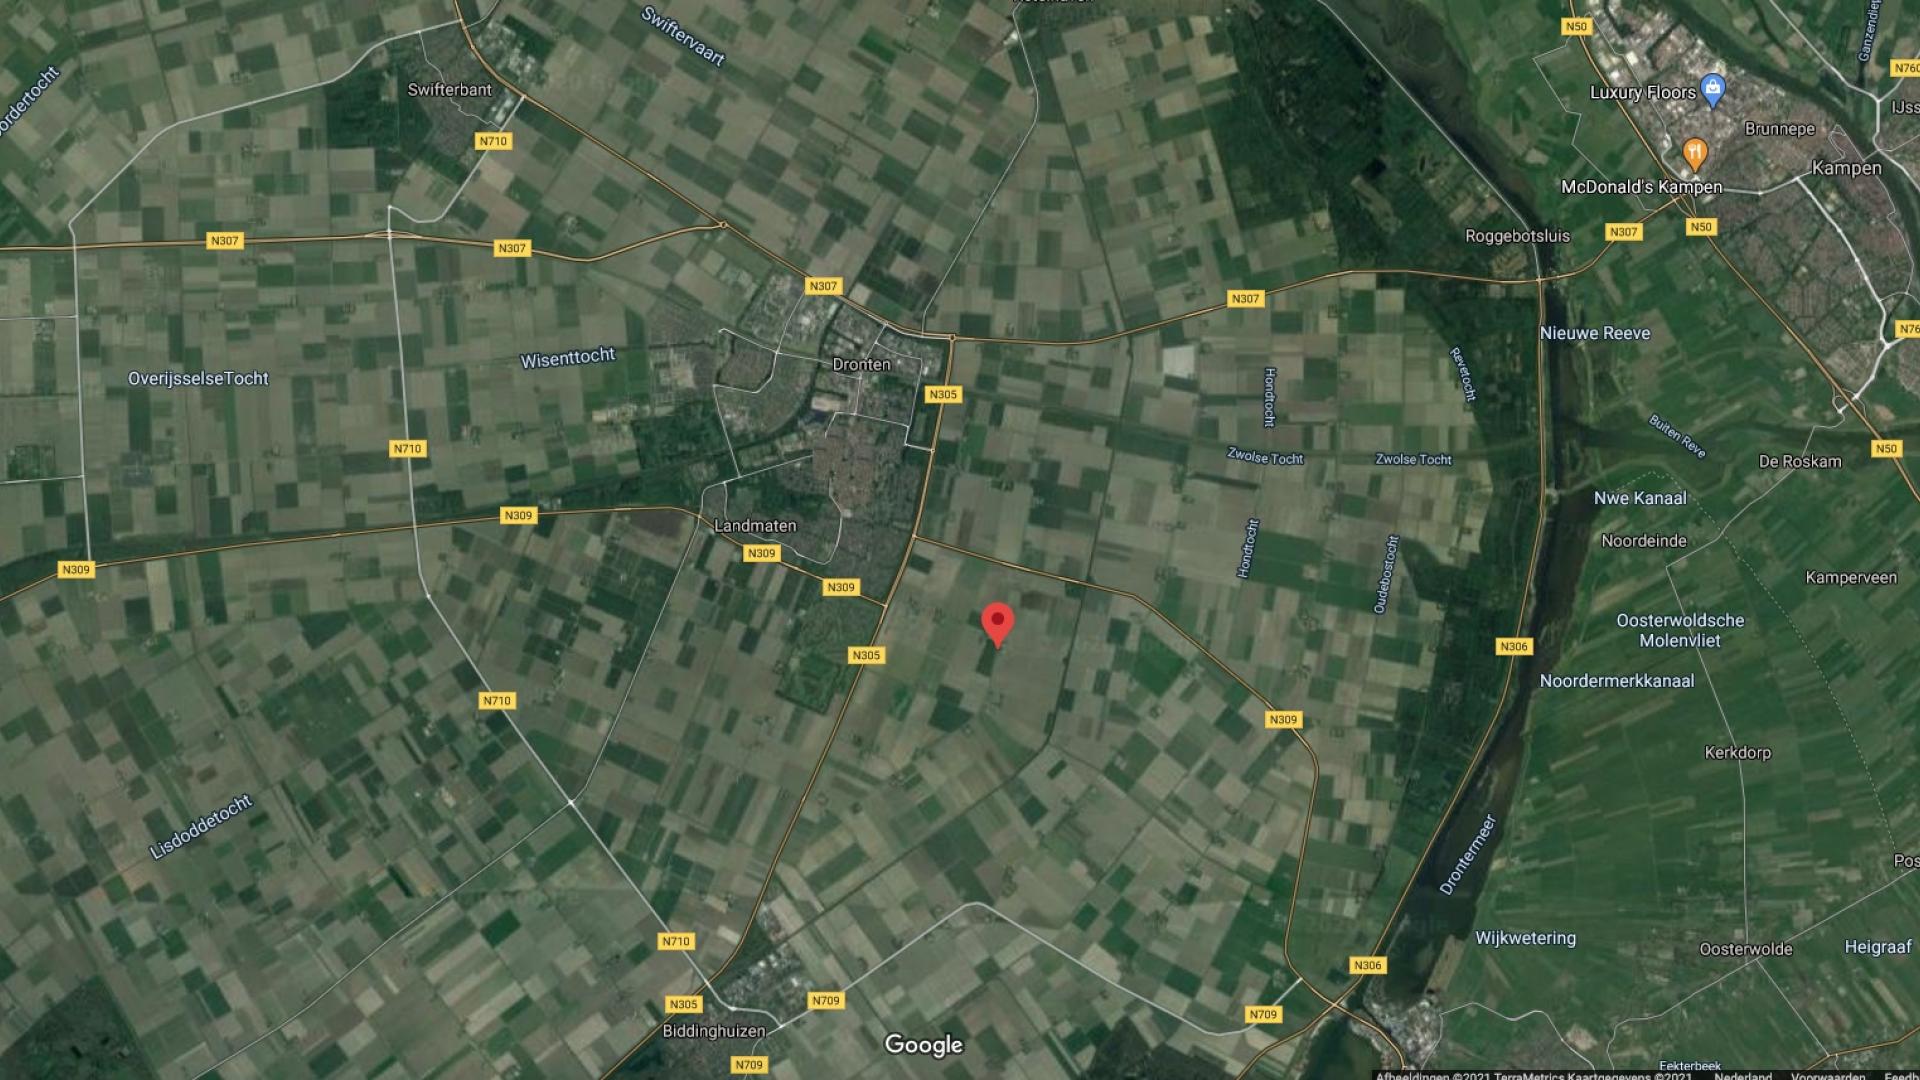 Middelpunt Nederland volgens Google